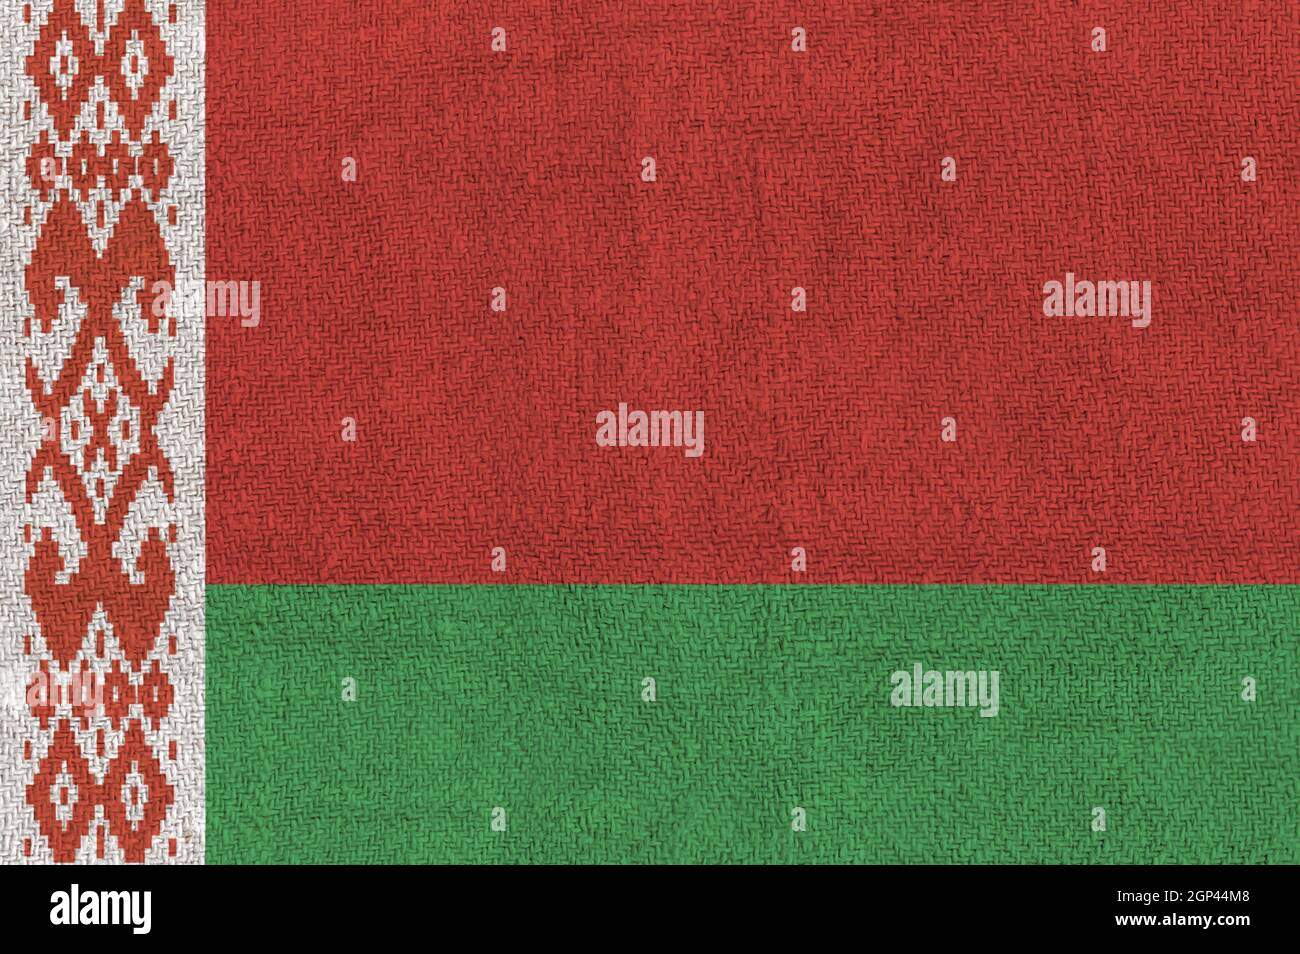 Belarus flag printed on linen fabric. National flag of Belarus. Belarus national flag on canvas Stock Photo